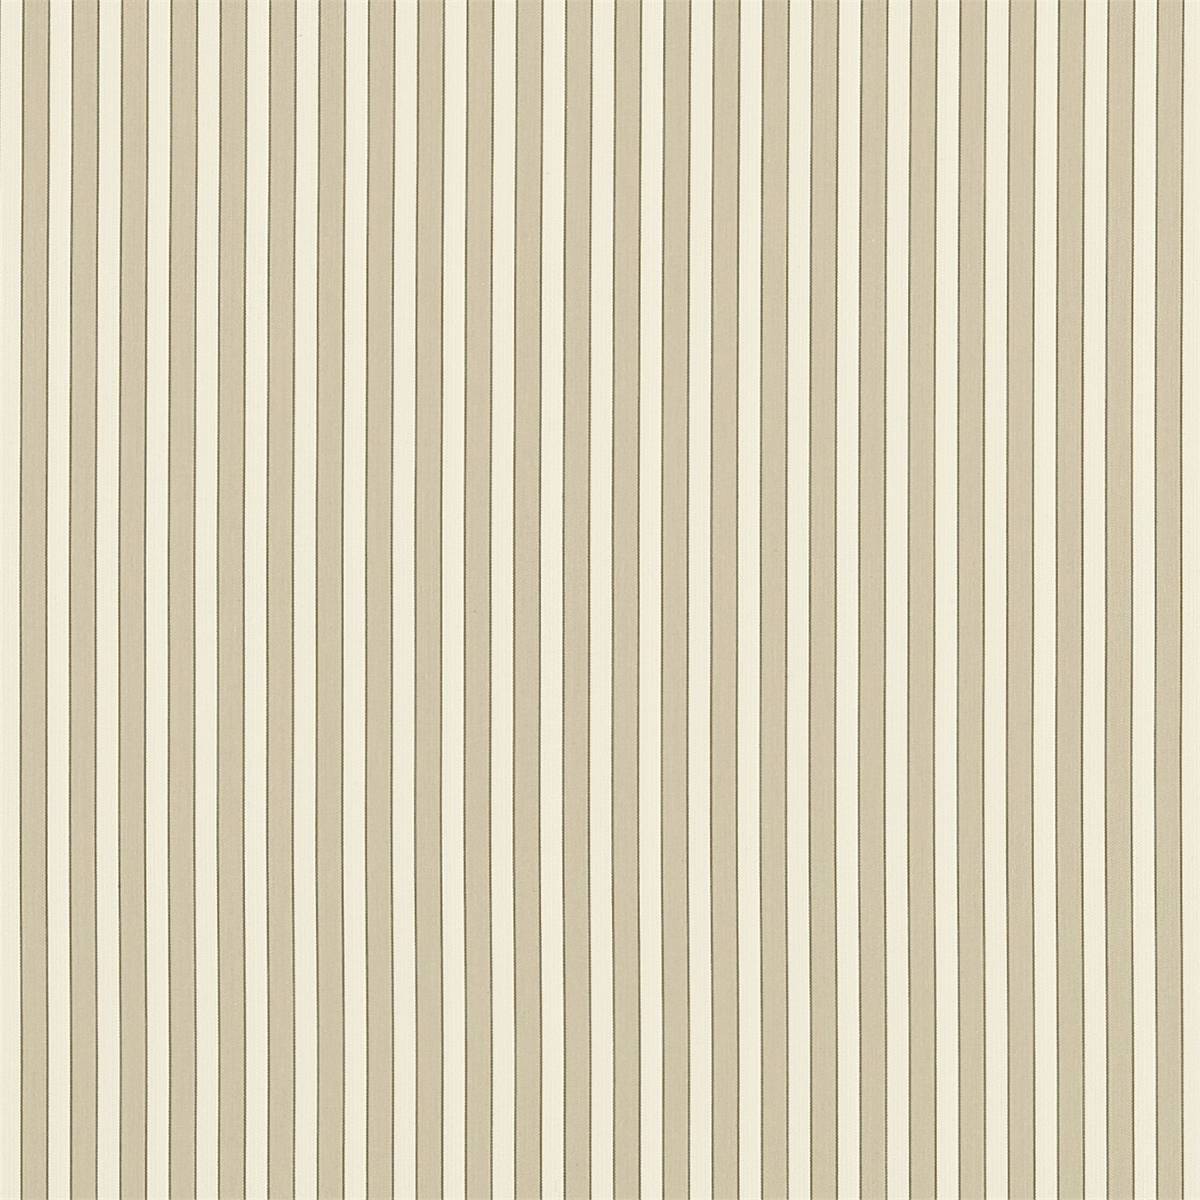 Sutton Linen/Cream Fabric by Sanderson